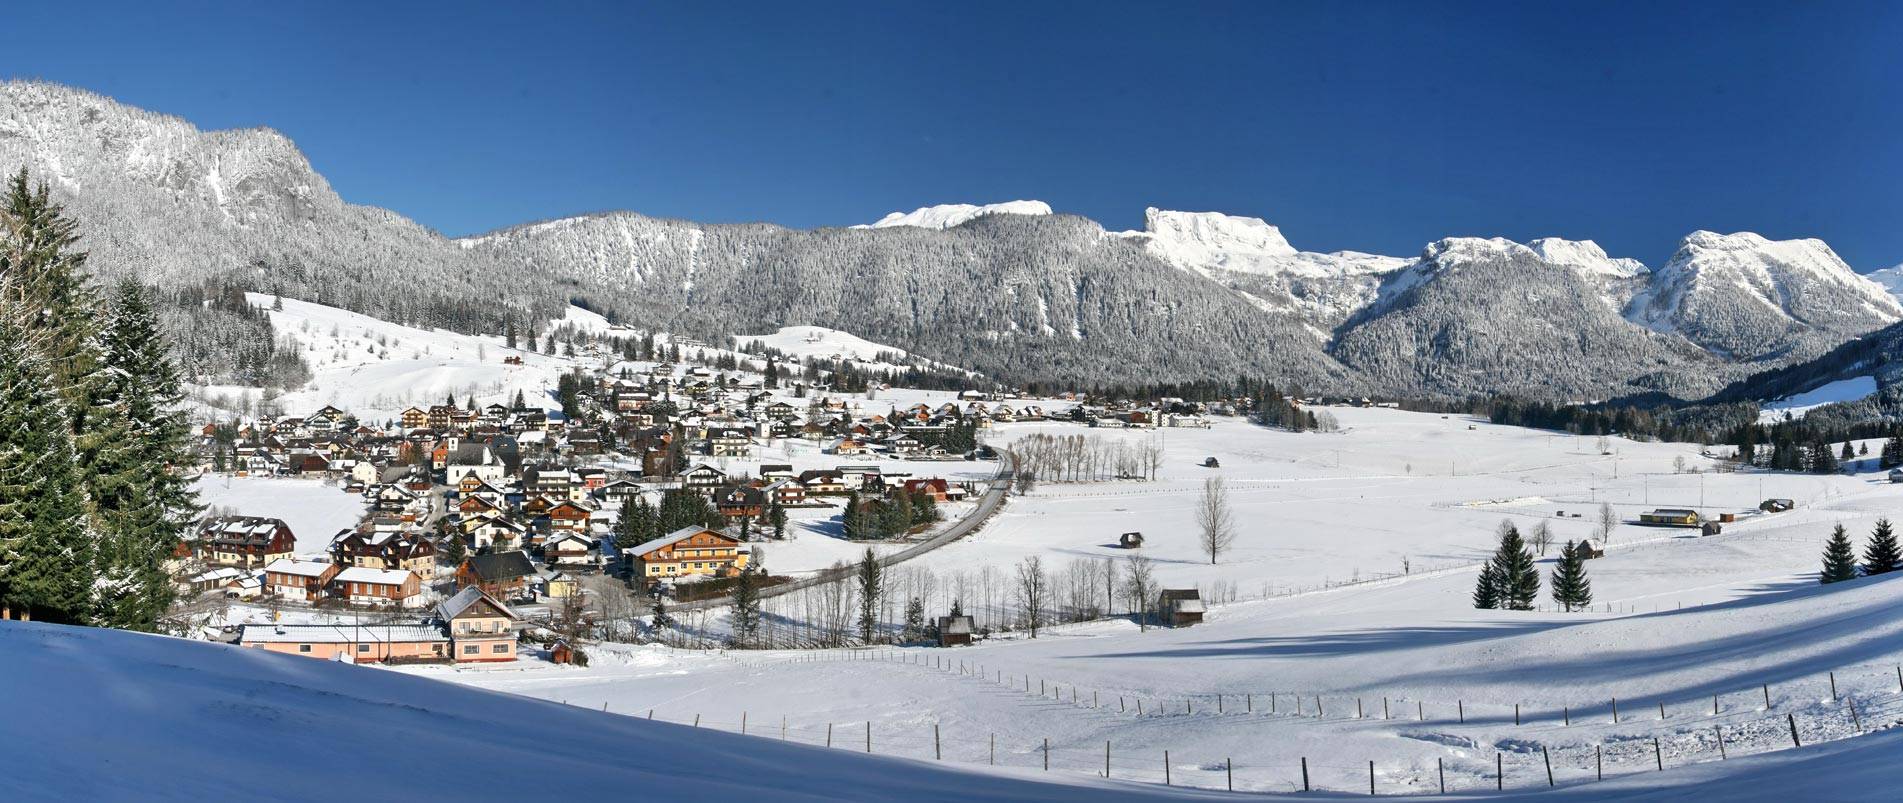 Panorama Wintersportort Tauplitz c Kreutzer